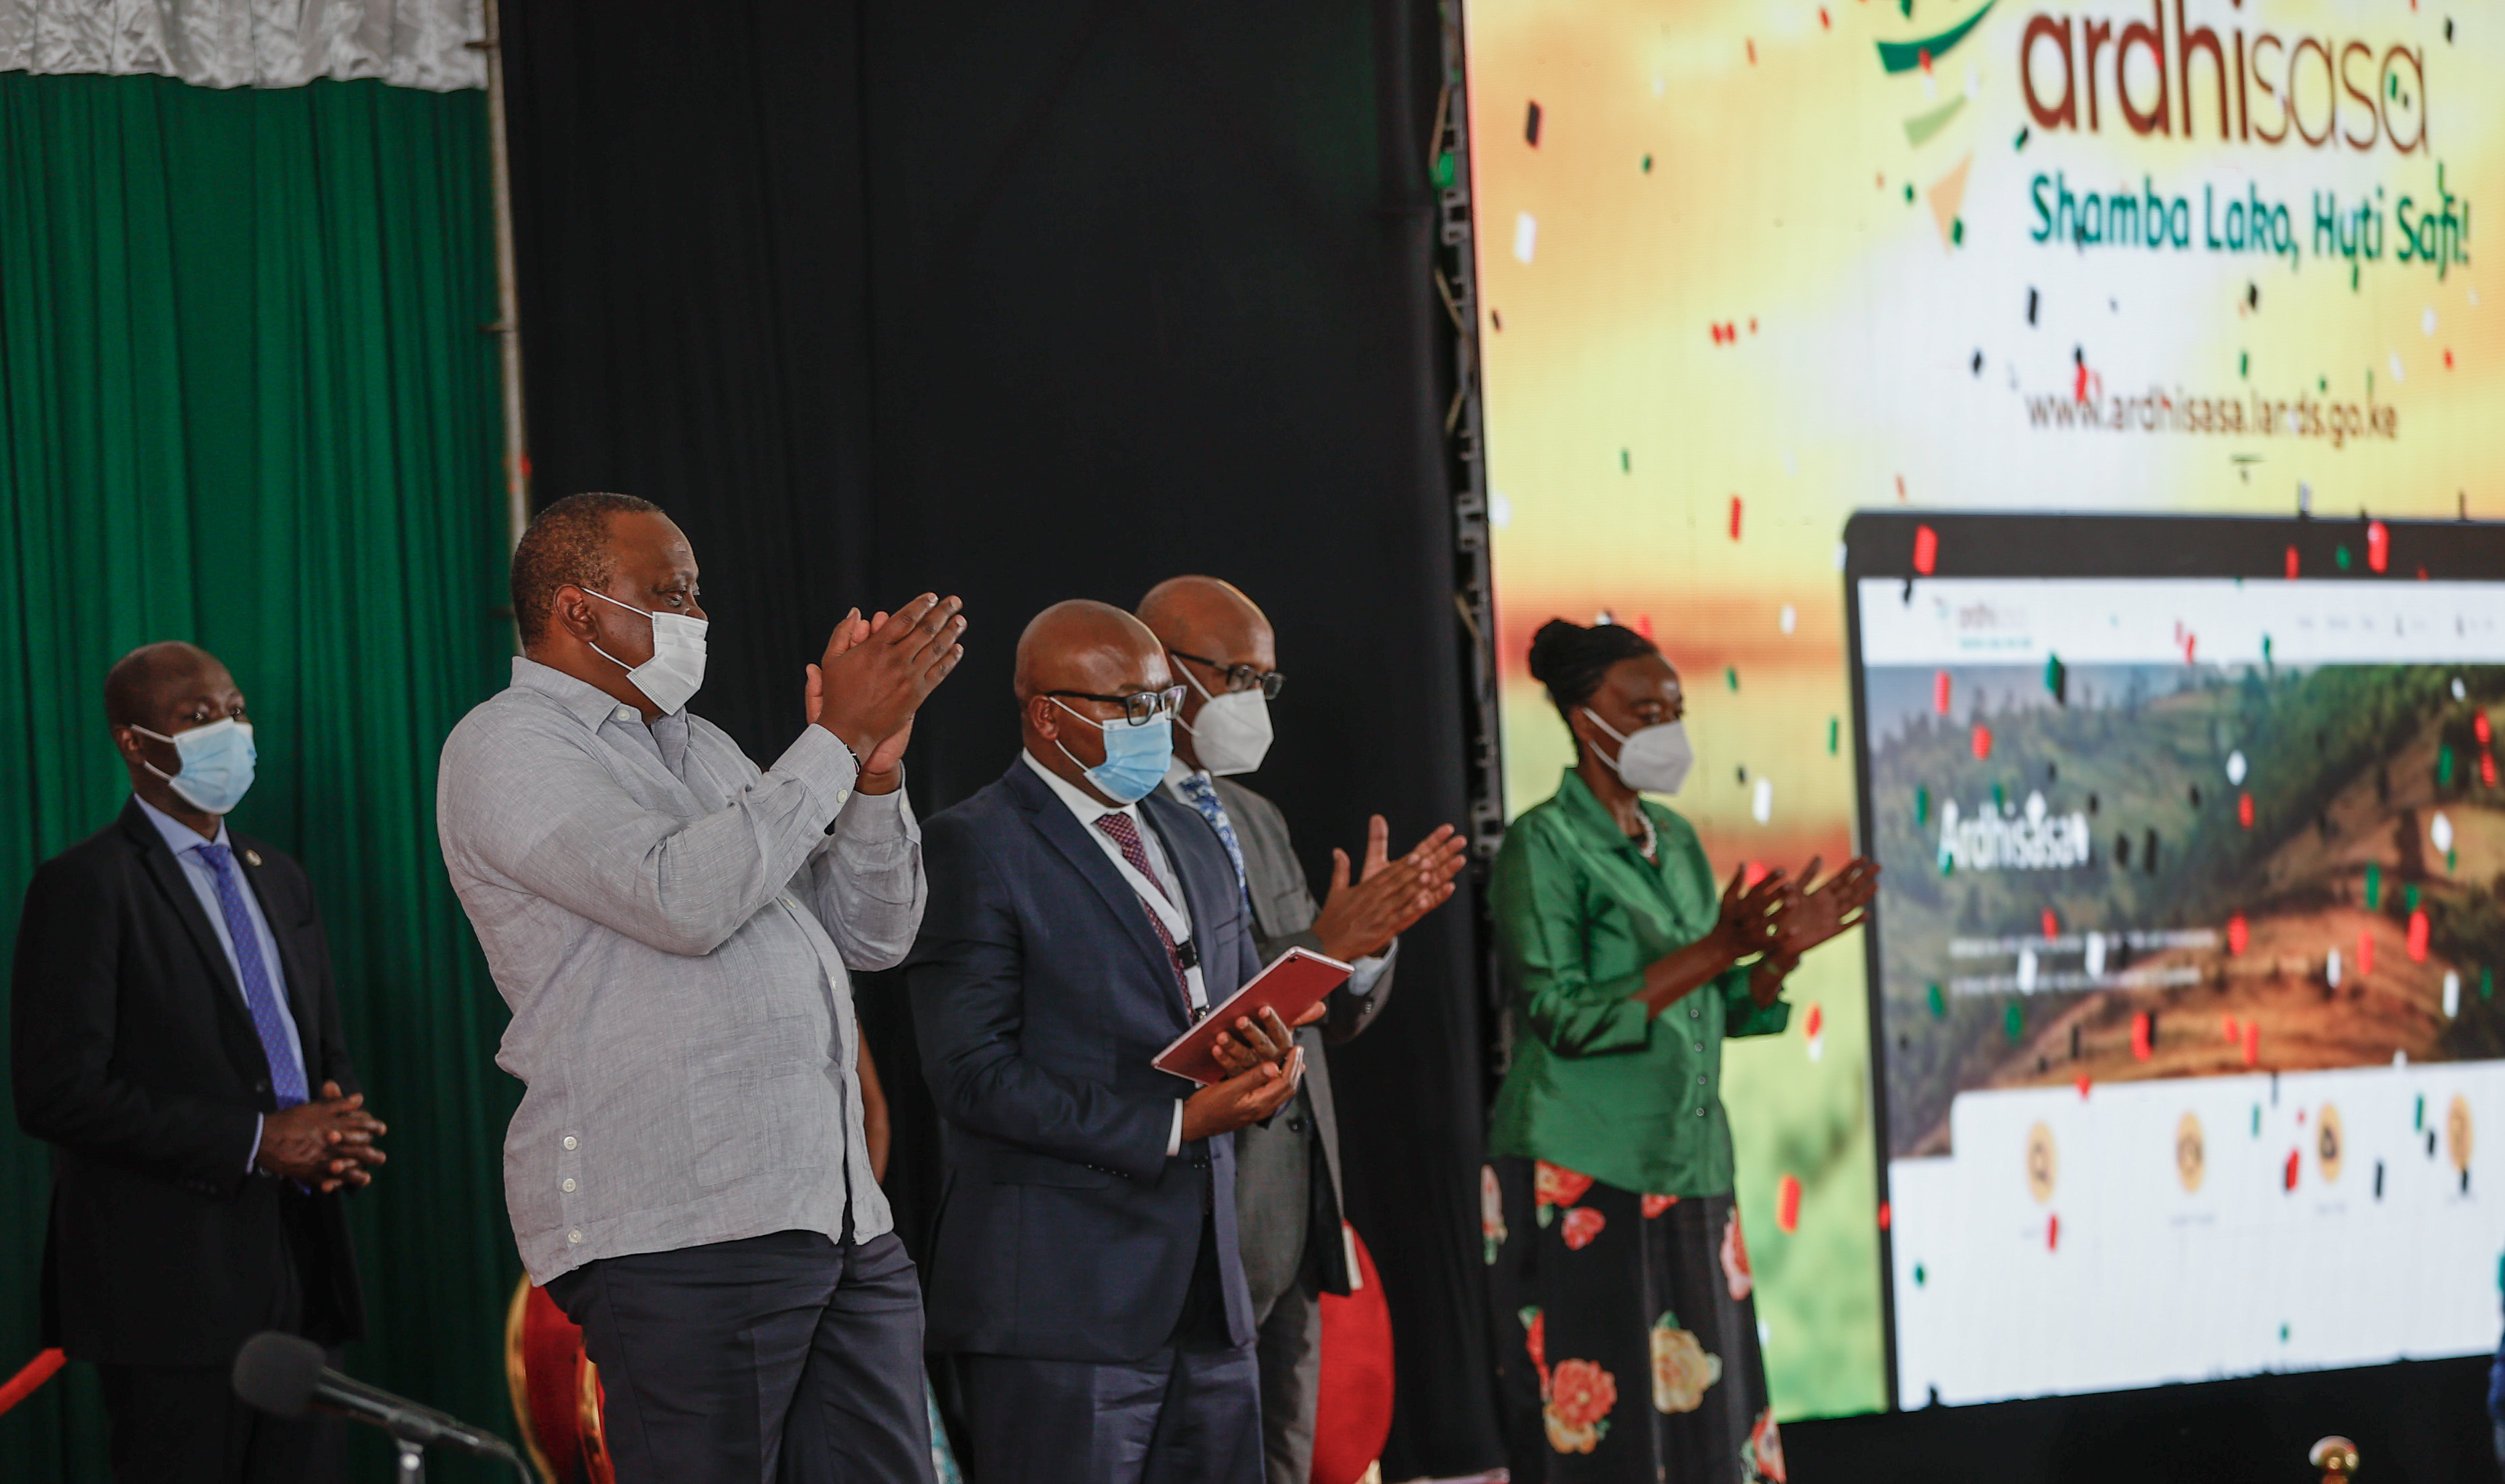 Presiden Uhuru Kenyatta launching "Ardhisasa" PHOTO/PSCU